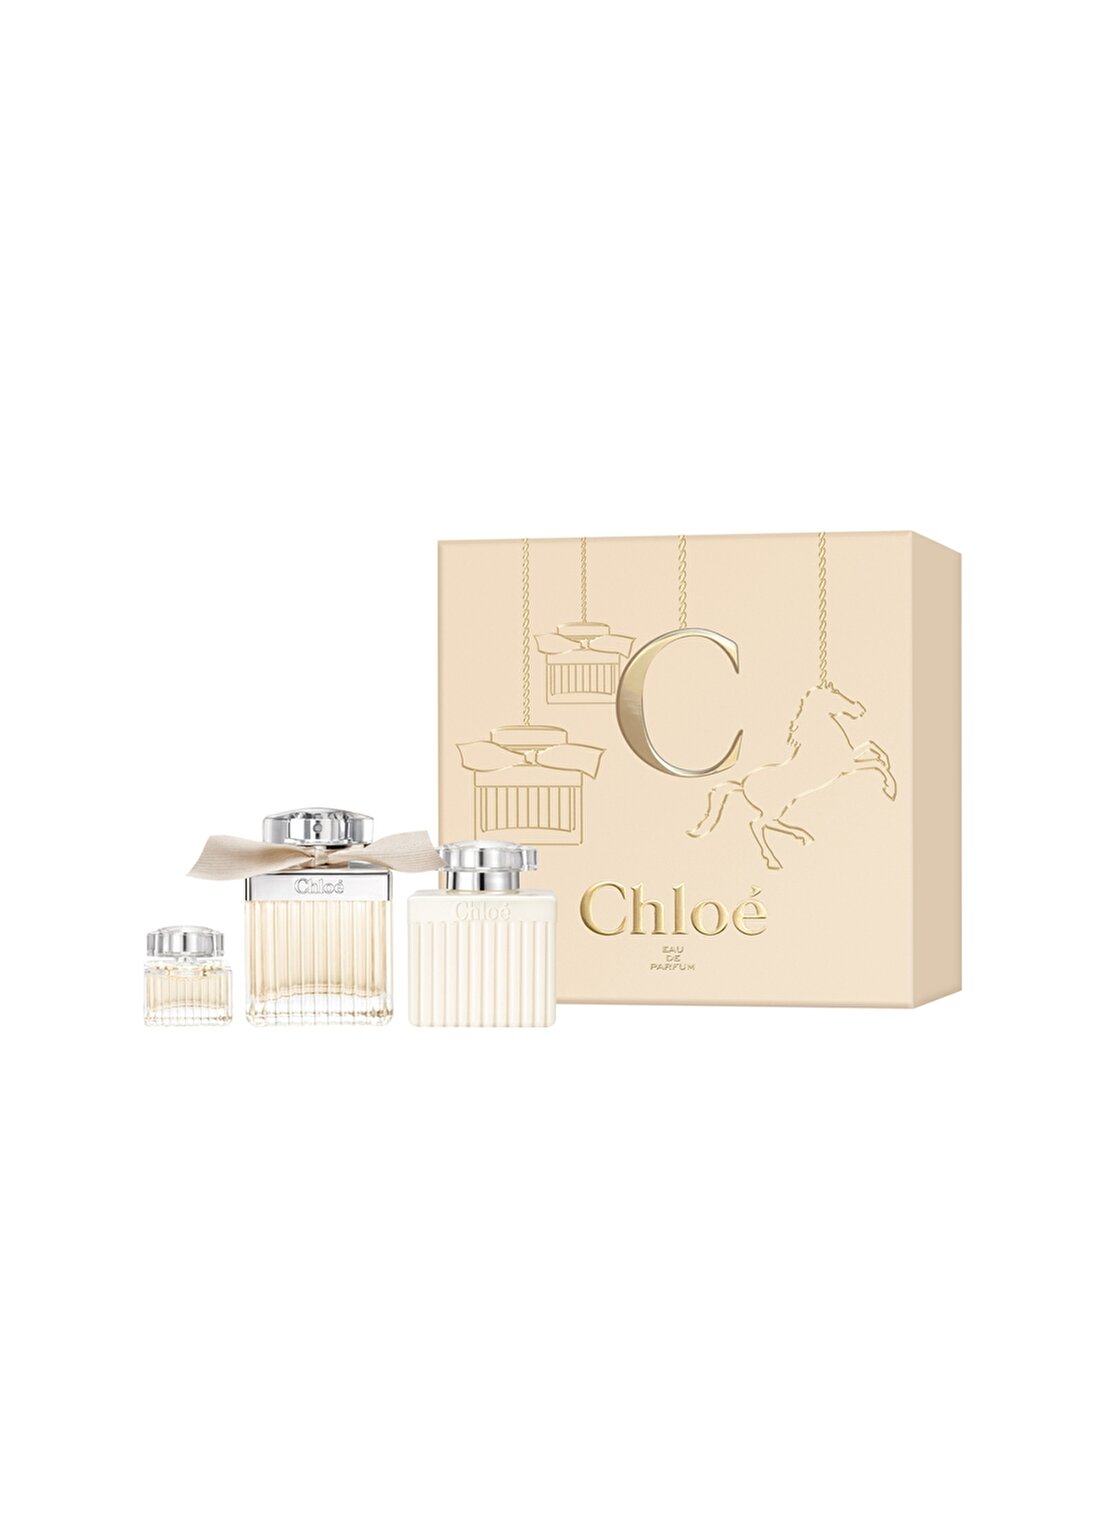 Chloe Signiture Edp 75 Ml + 100 Ml BL +5 Ml Deluxe Xmas19 Parfüm Set